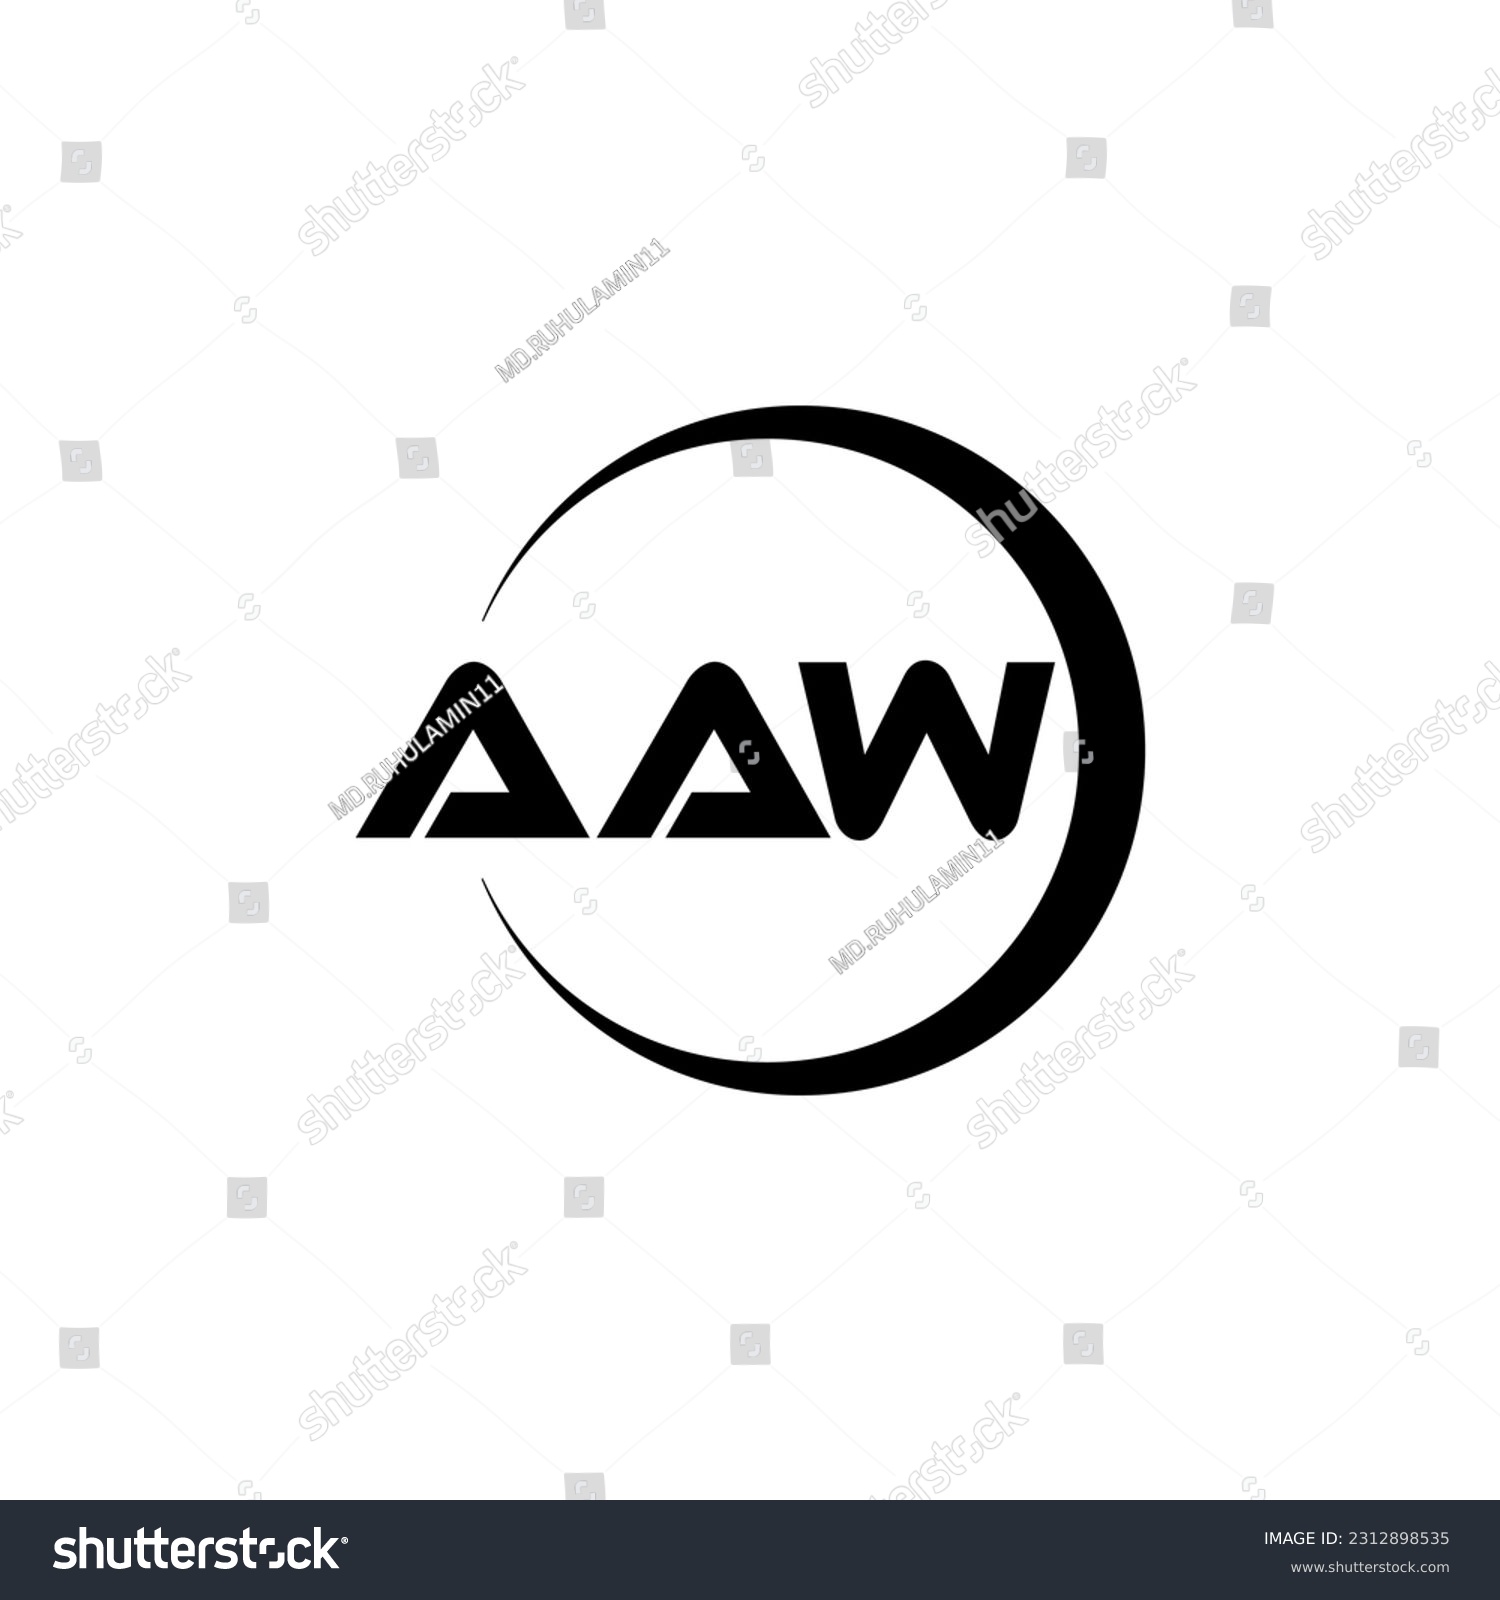 SVG of AAW letter logo design in illustration. Vector logo, calligraphy designs for logo, Poster, Invitation, etc. svg